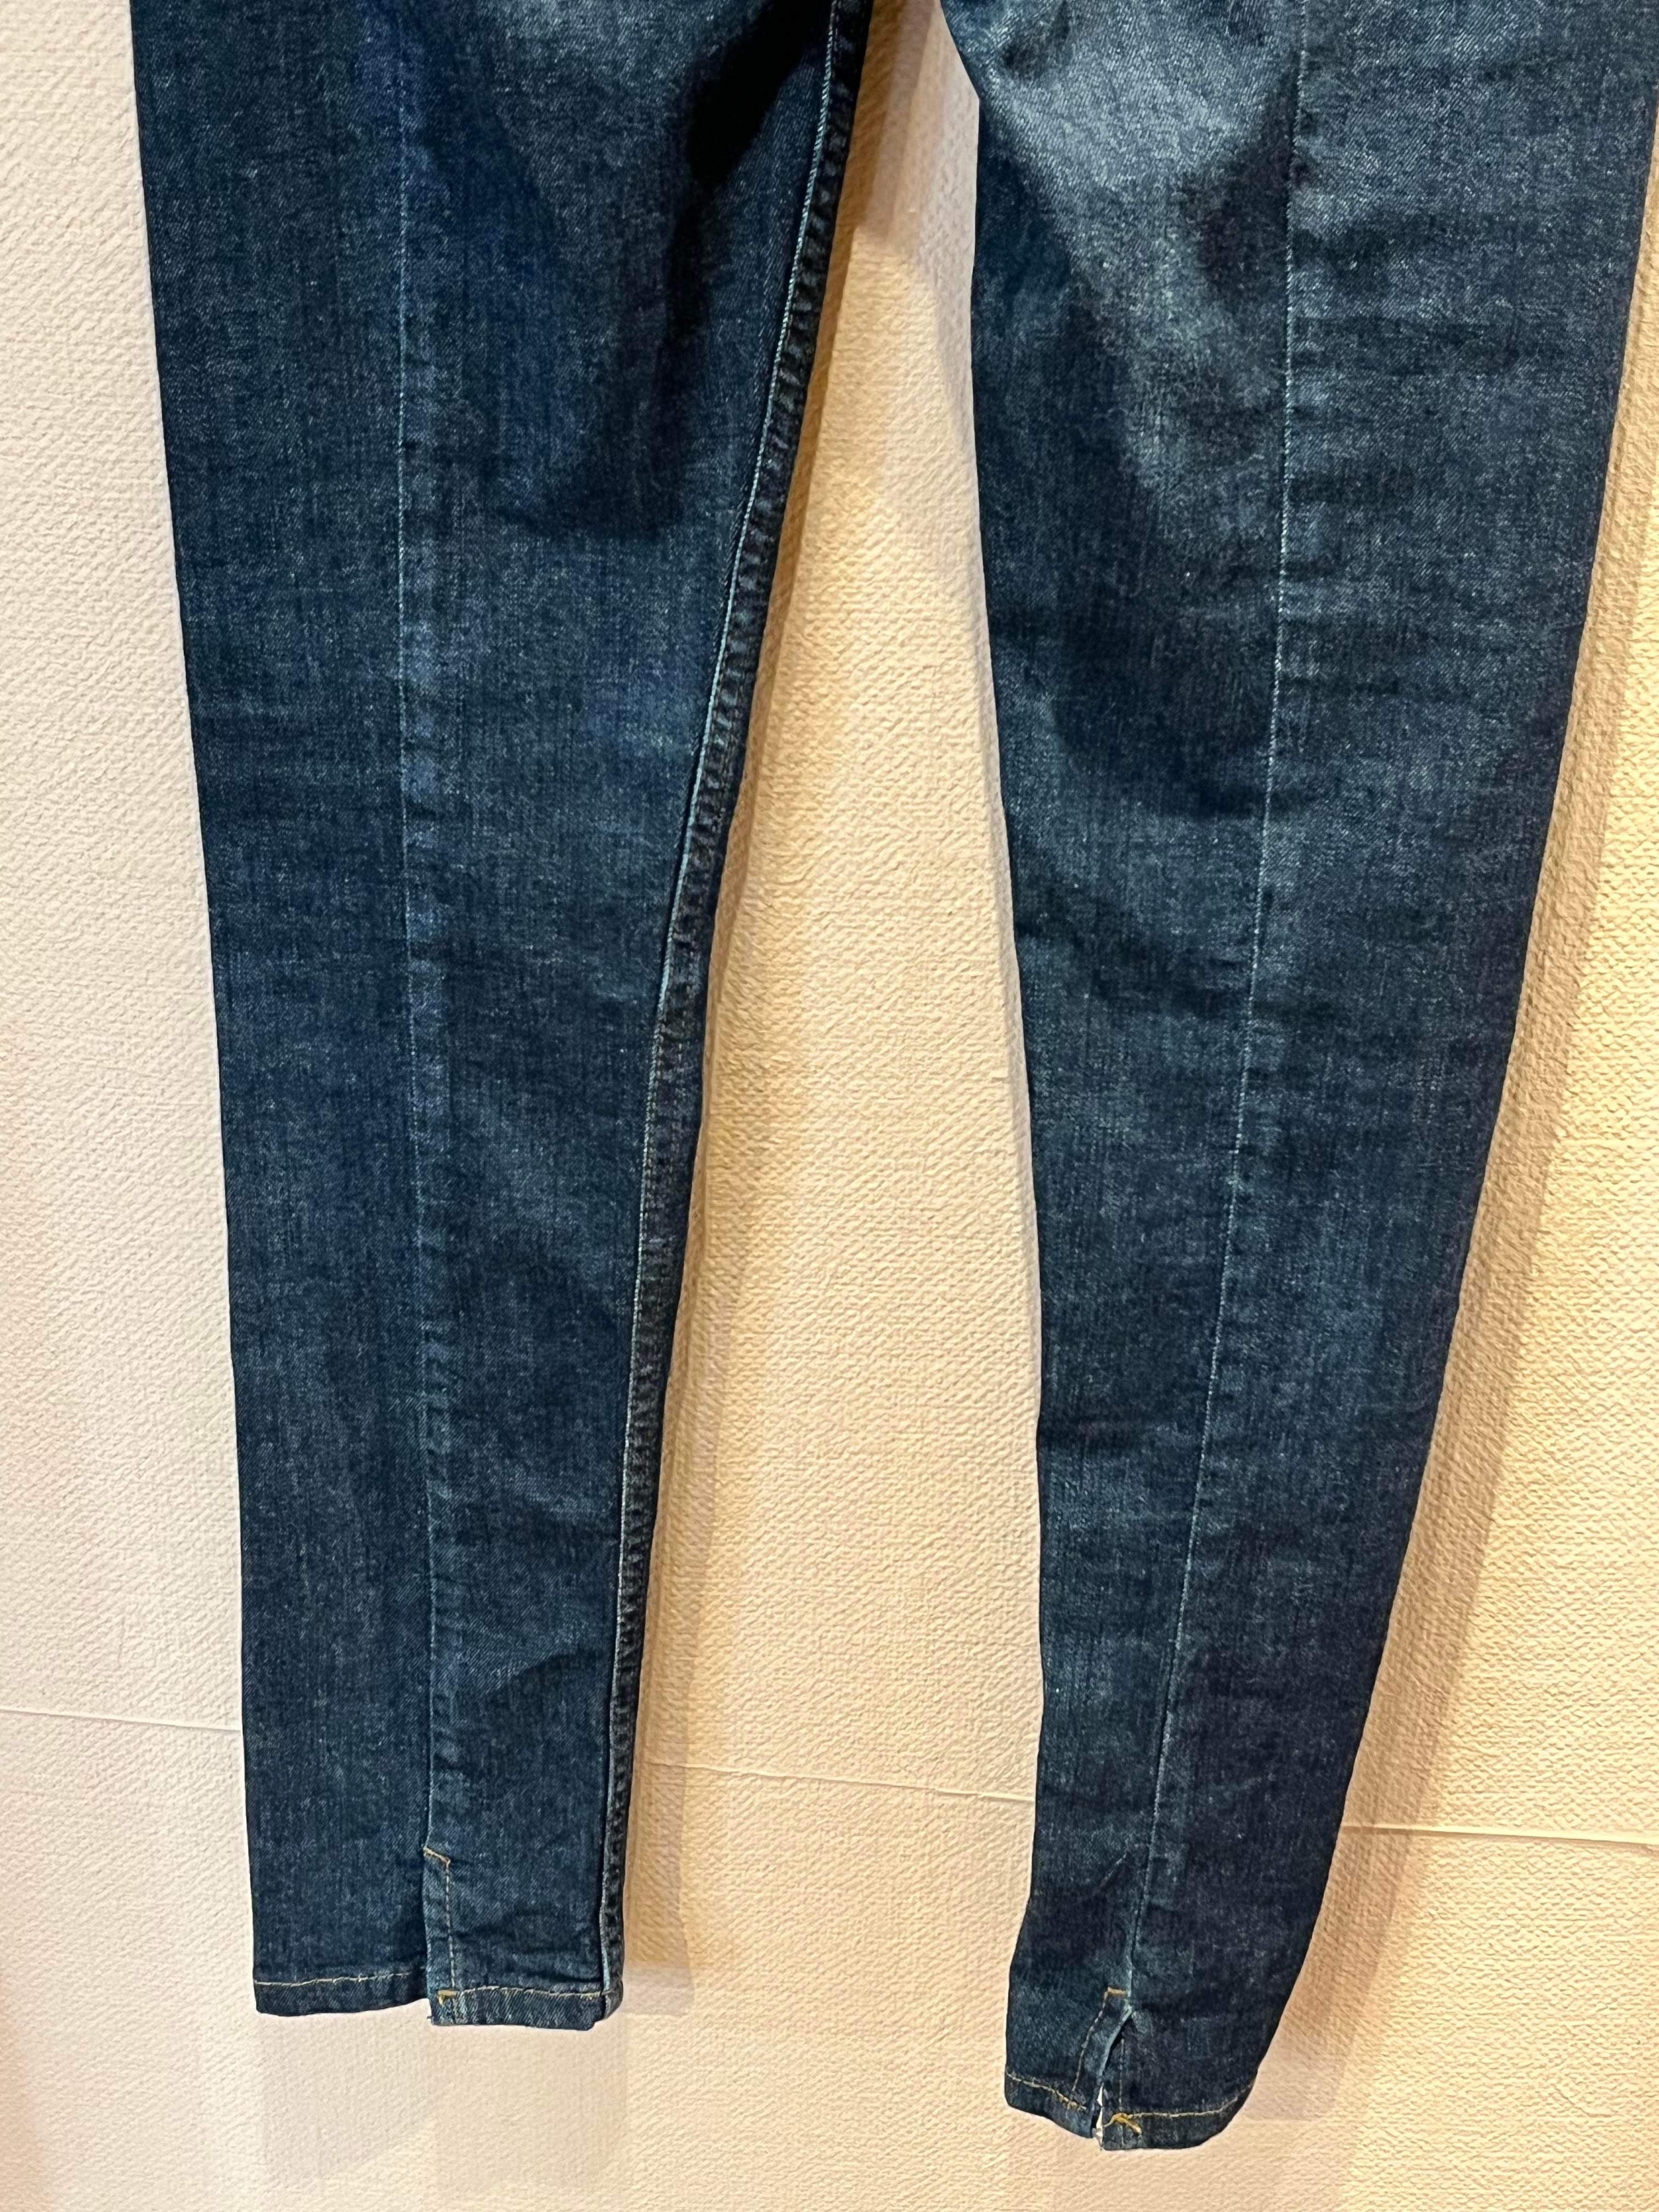 Bruuns Bazaar - Jeans - Size: 36